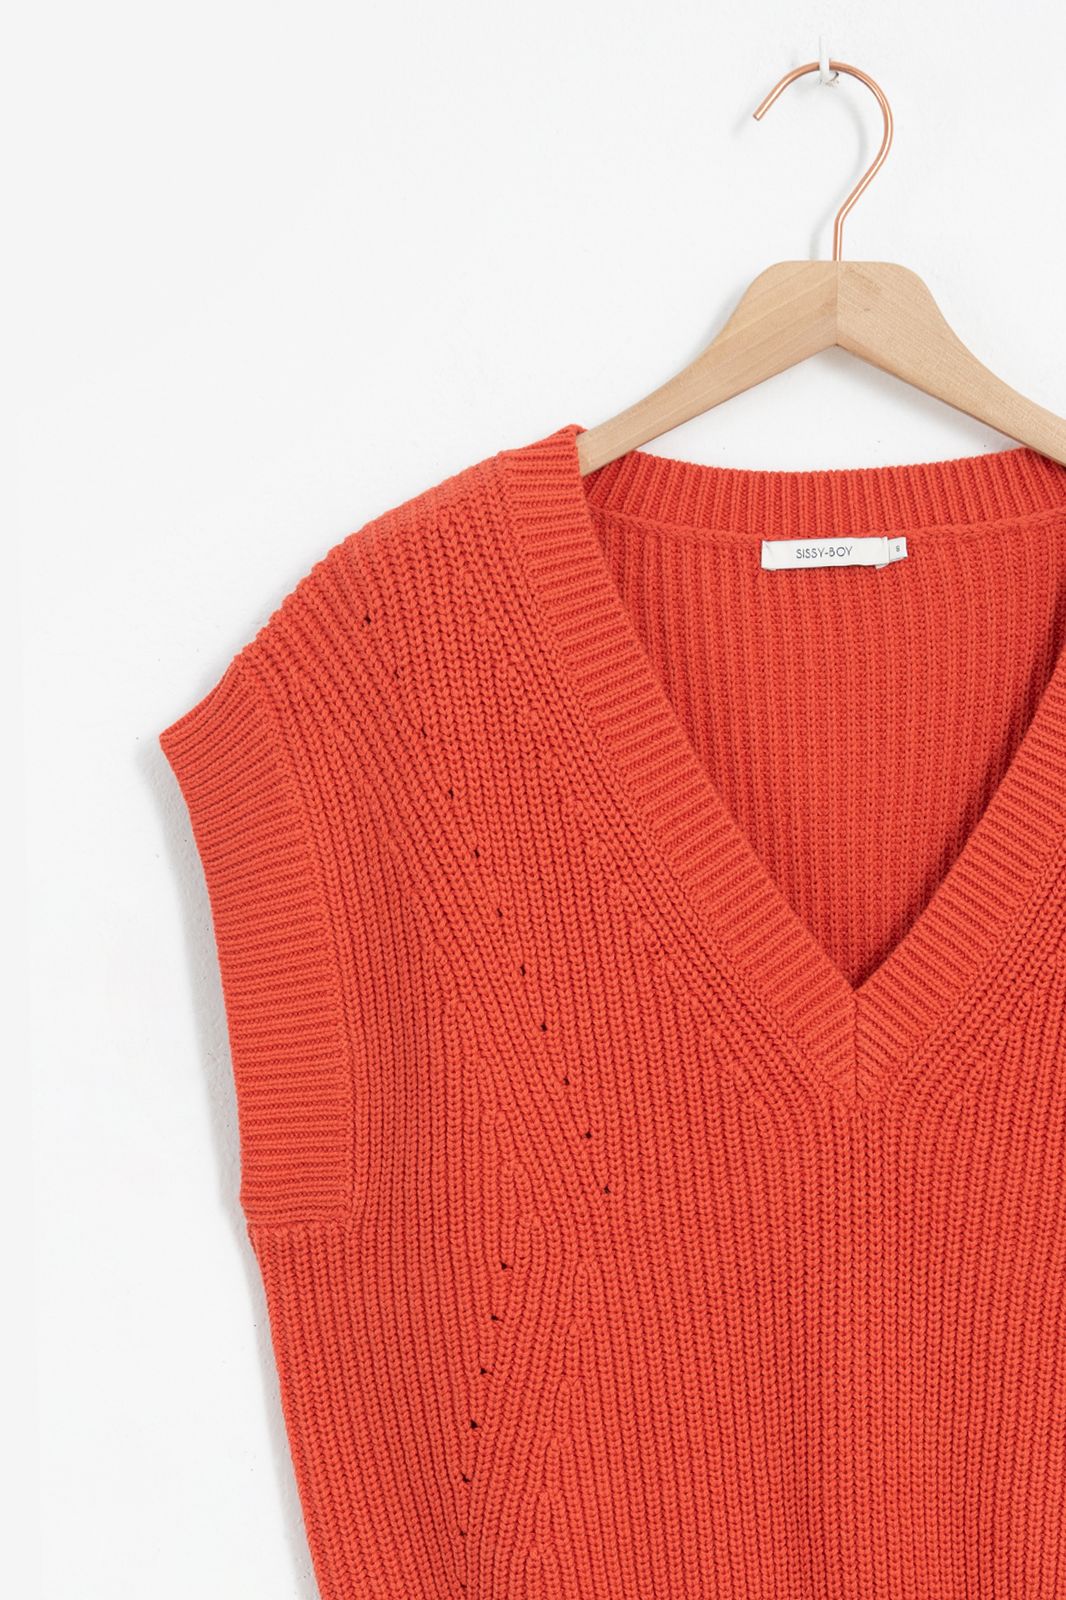 Spencer tricoté - rouge